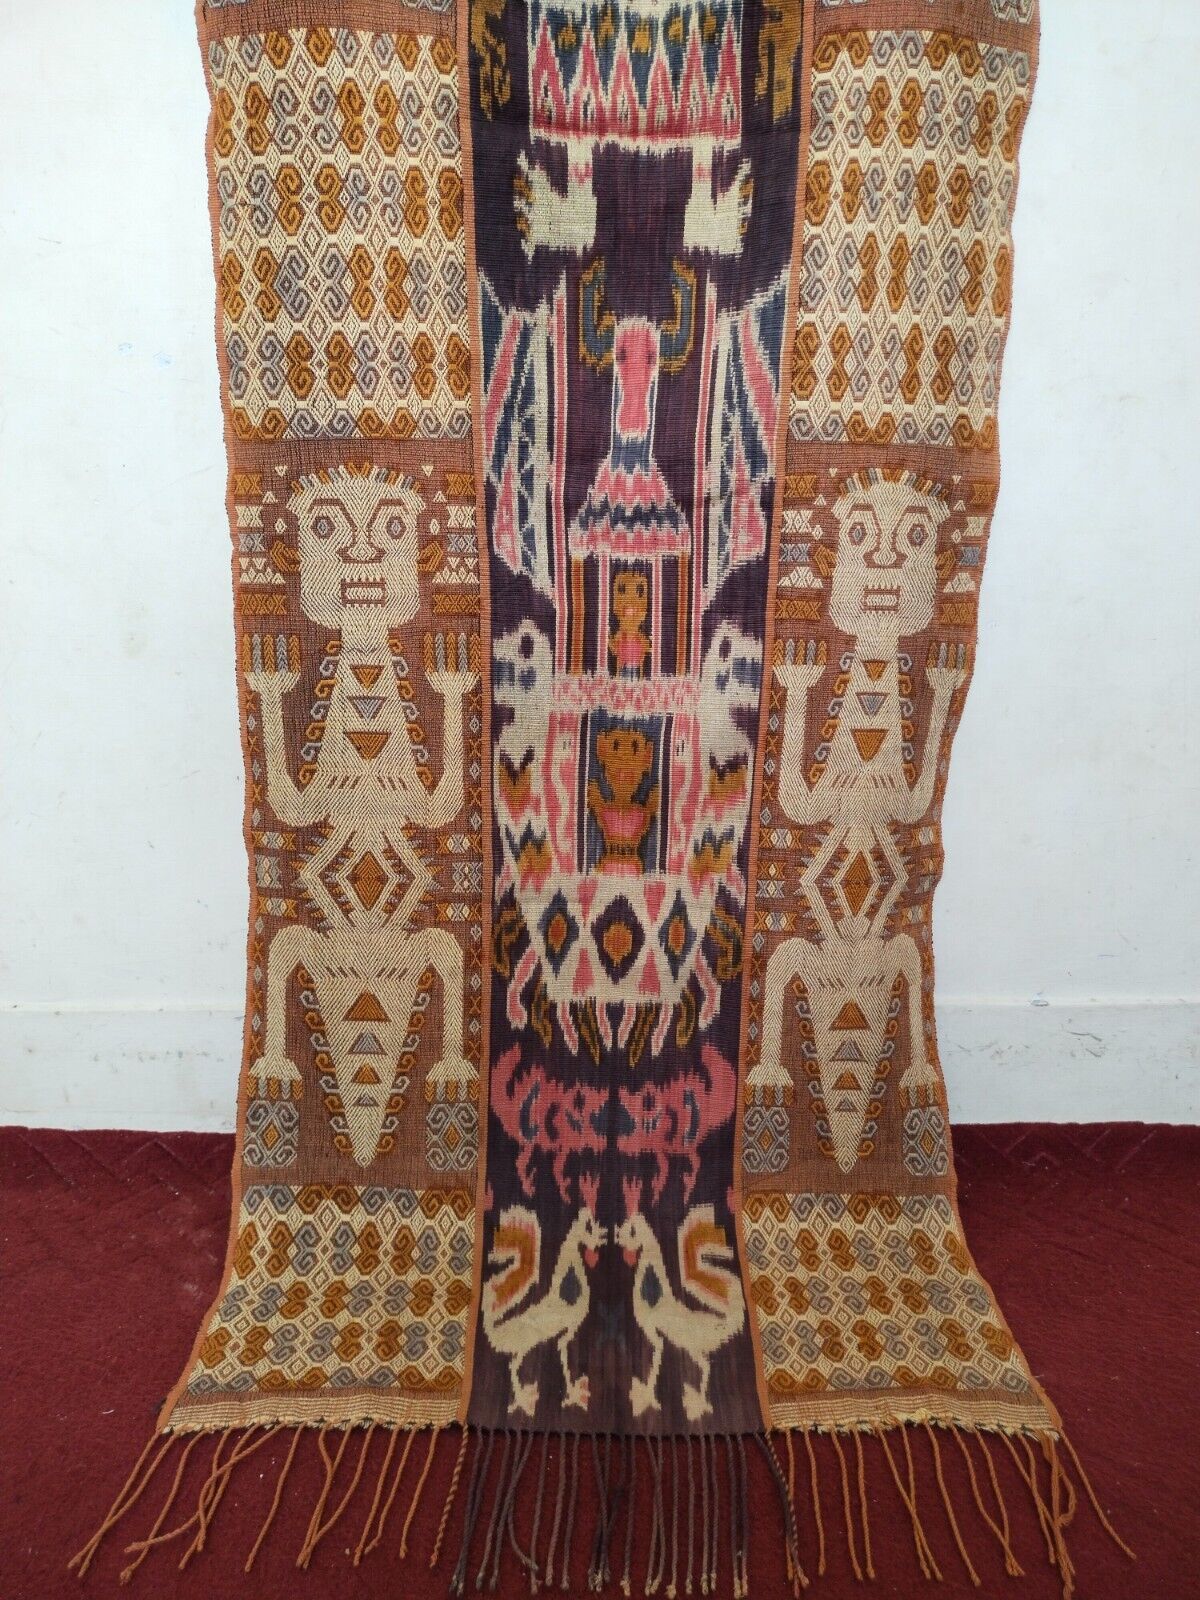 vintage amazing Indonesian sumba ikat woven blanket textile panel item891